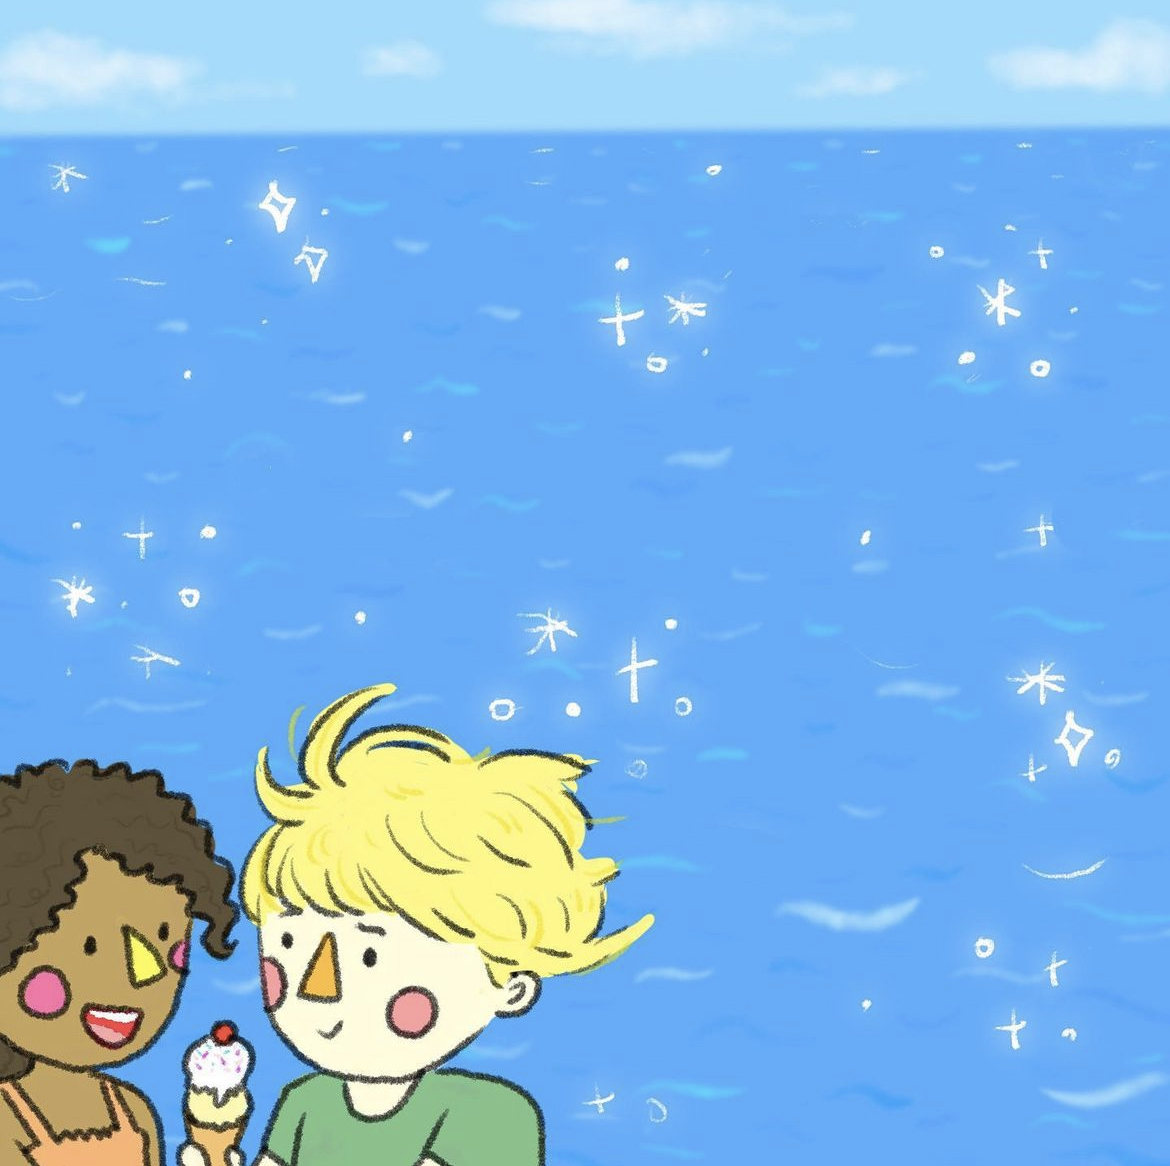 Ice cream by the Sea